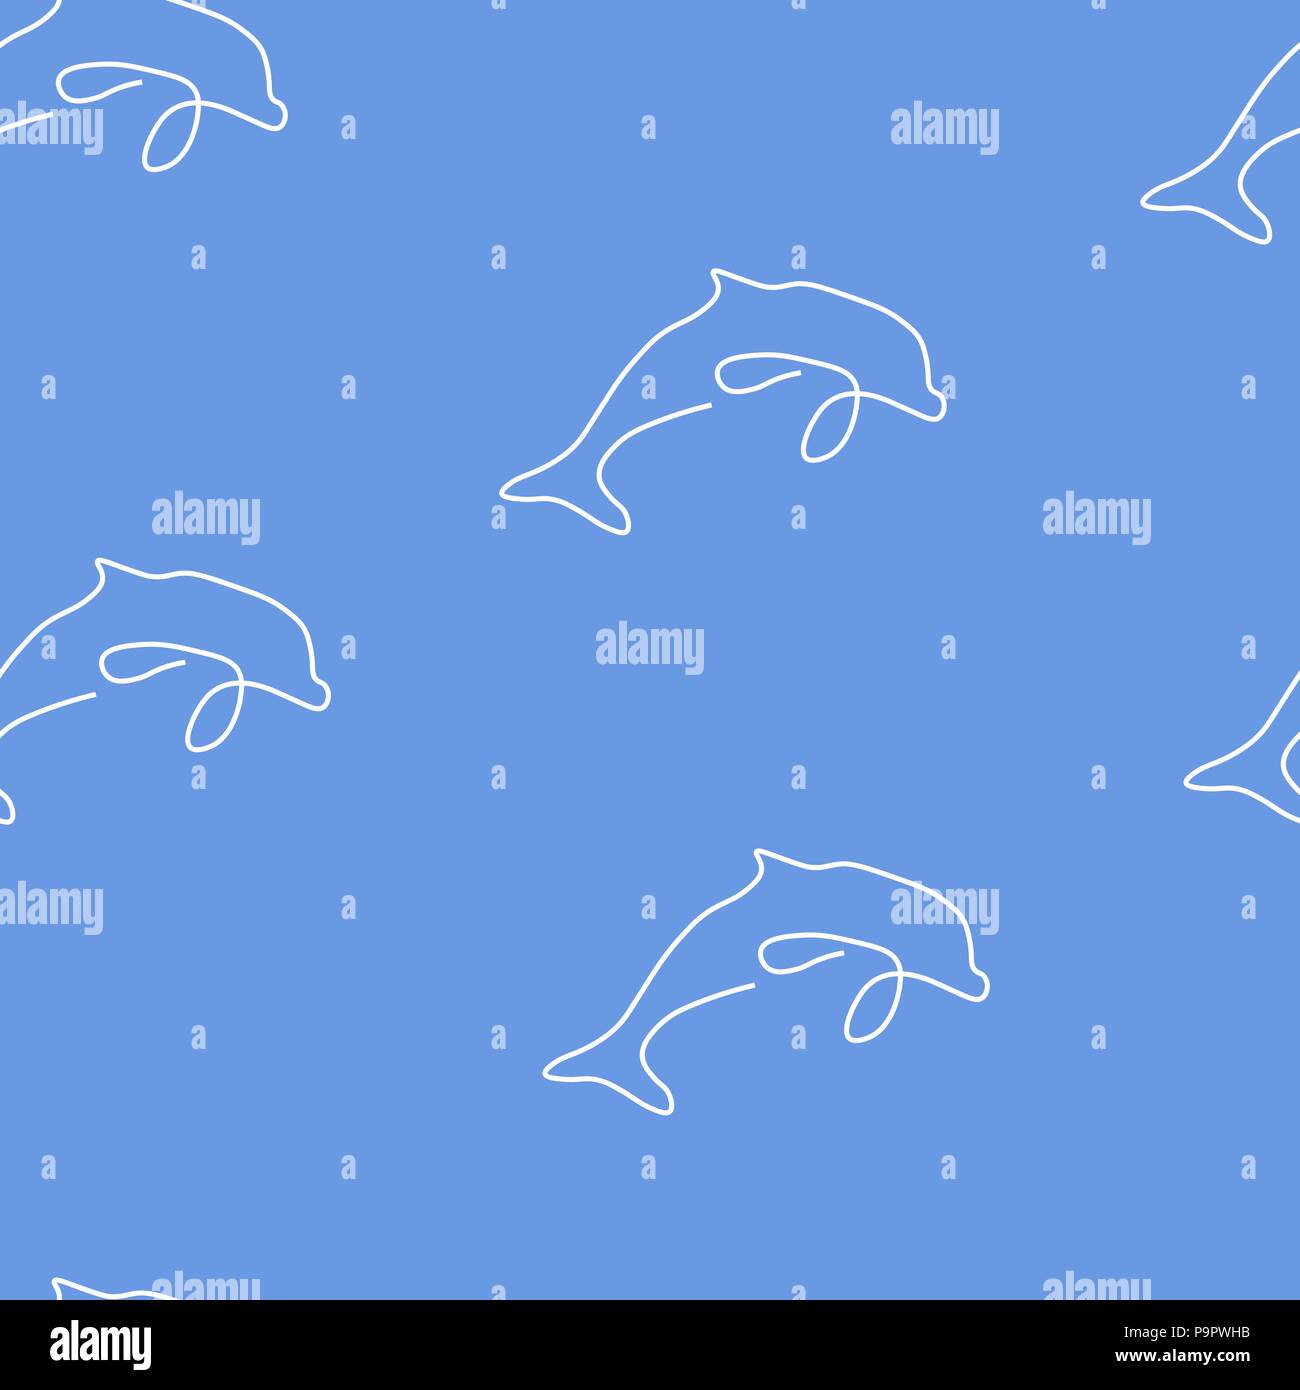 Delphin Tier Muster Nahtlose. Vector Illustration. Blauen Hintergrund. Stock Vektor